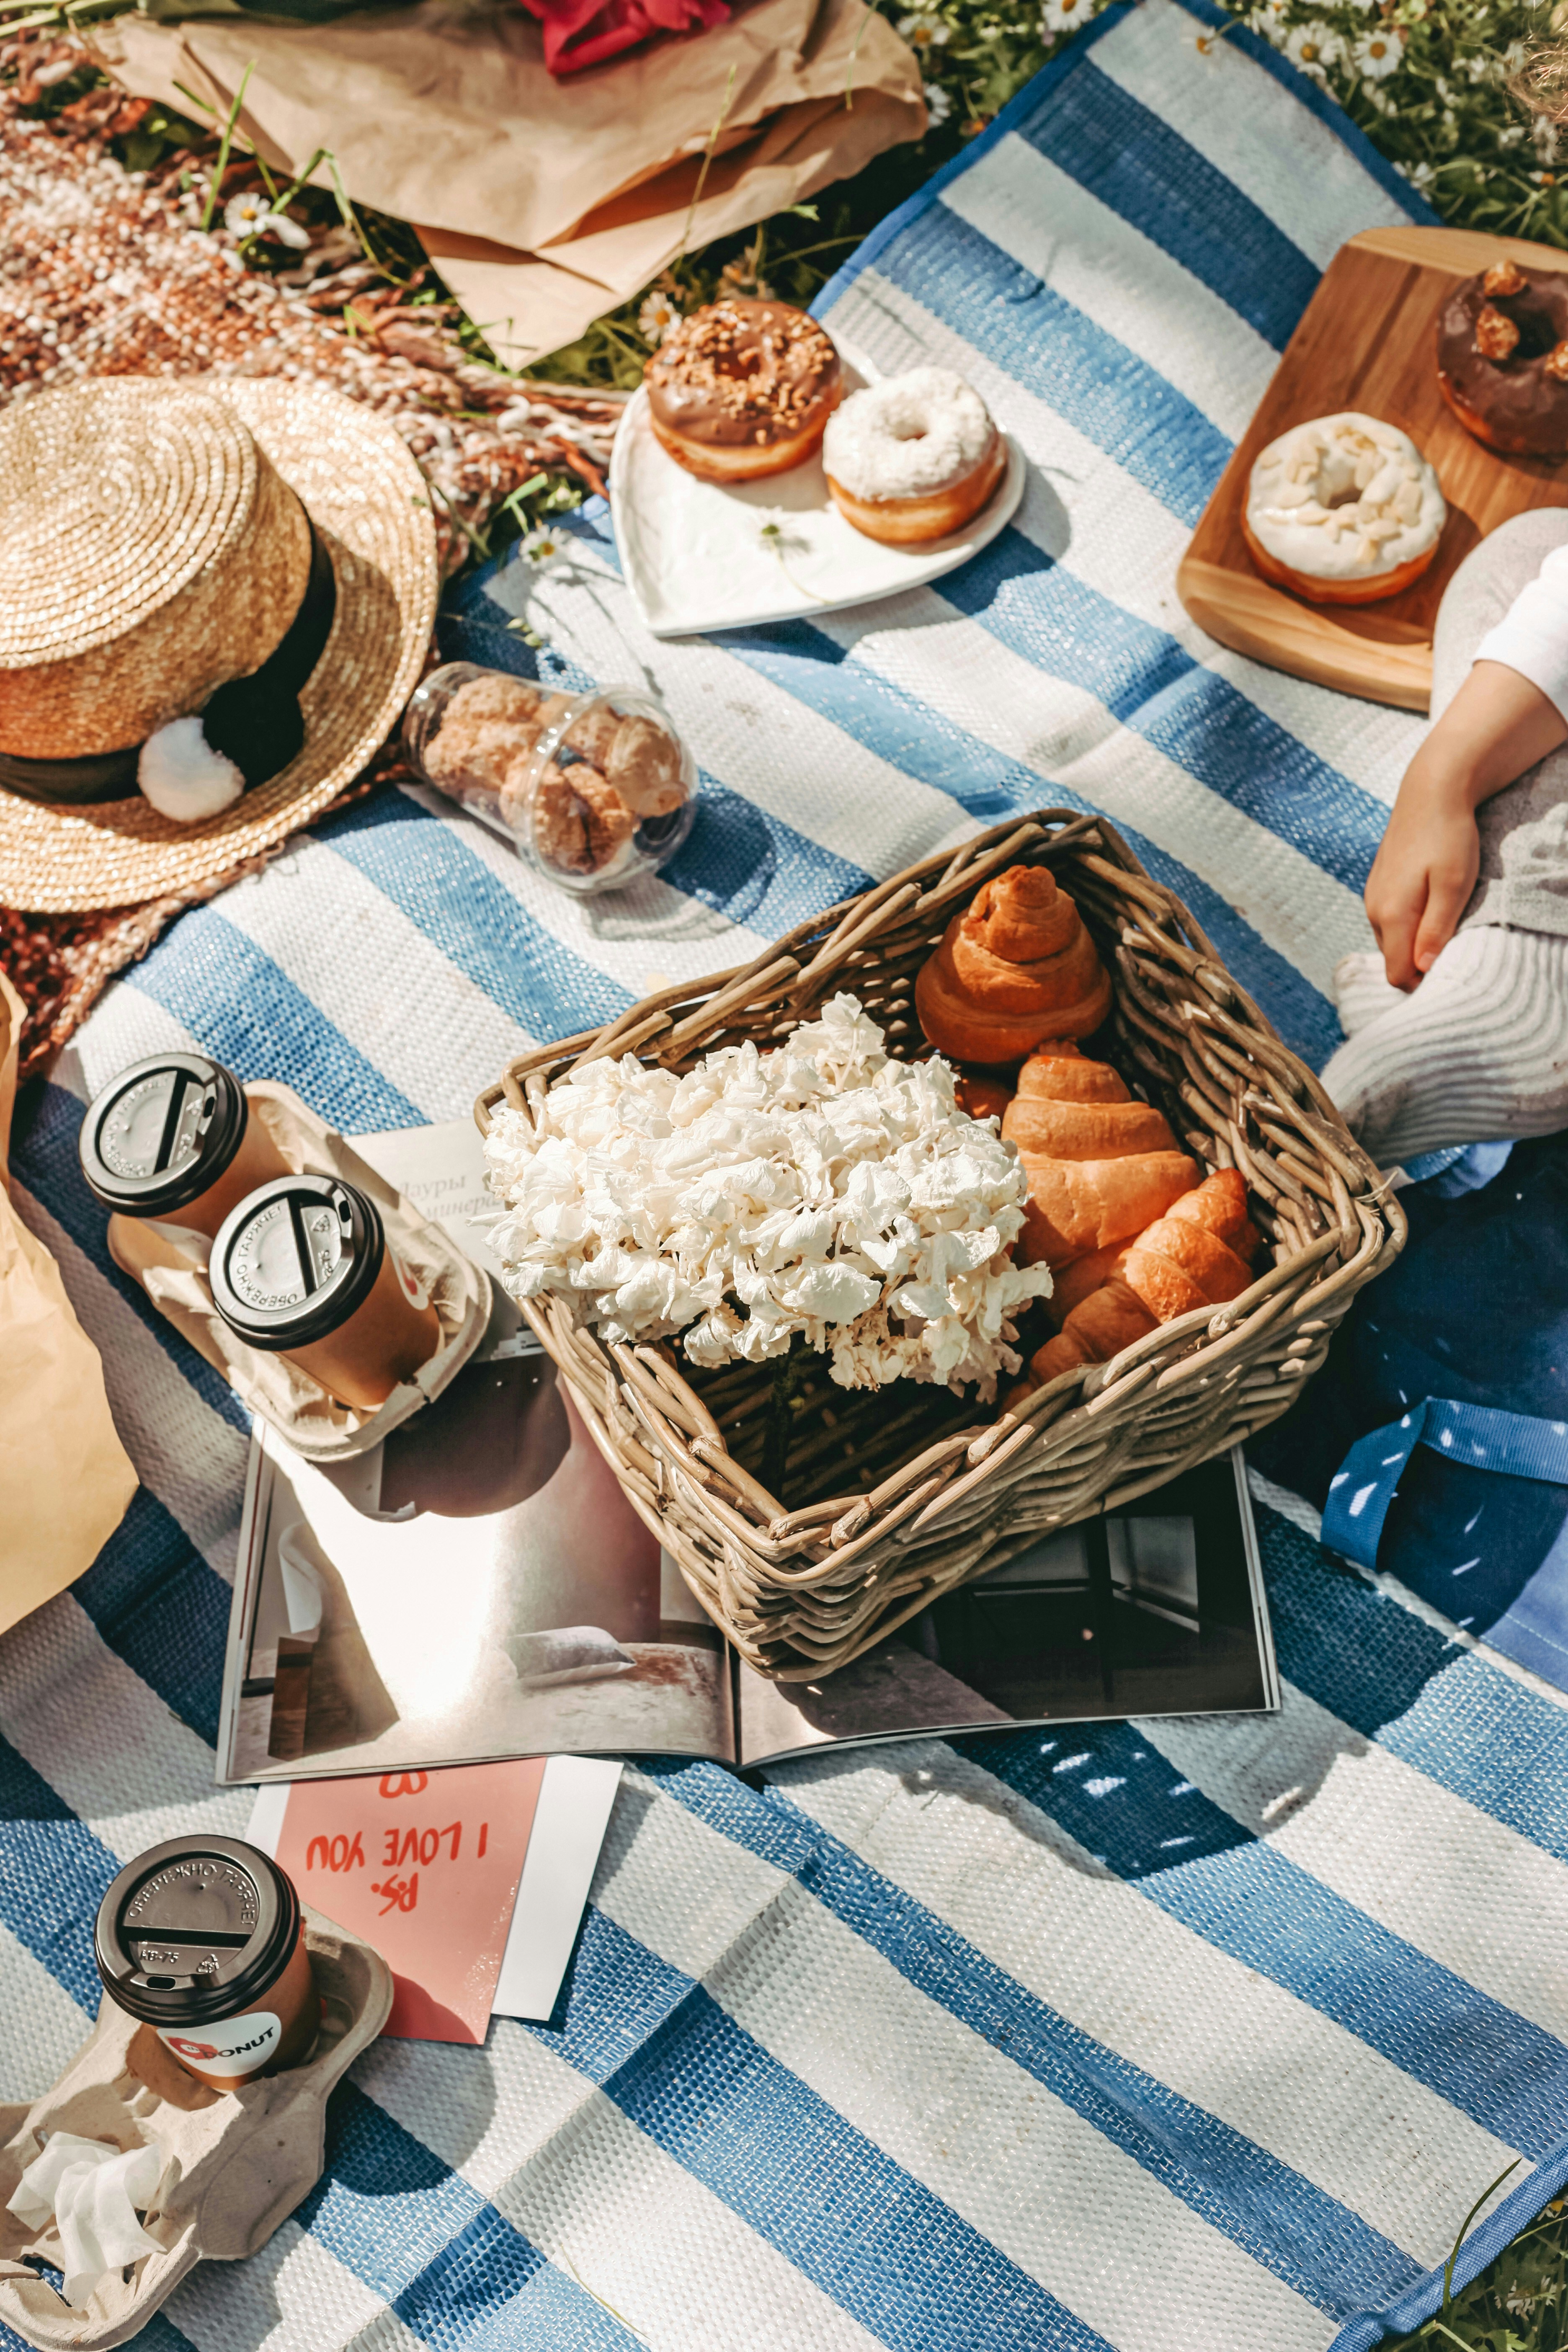 A picnic spread with potato salad